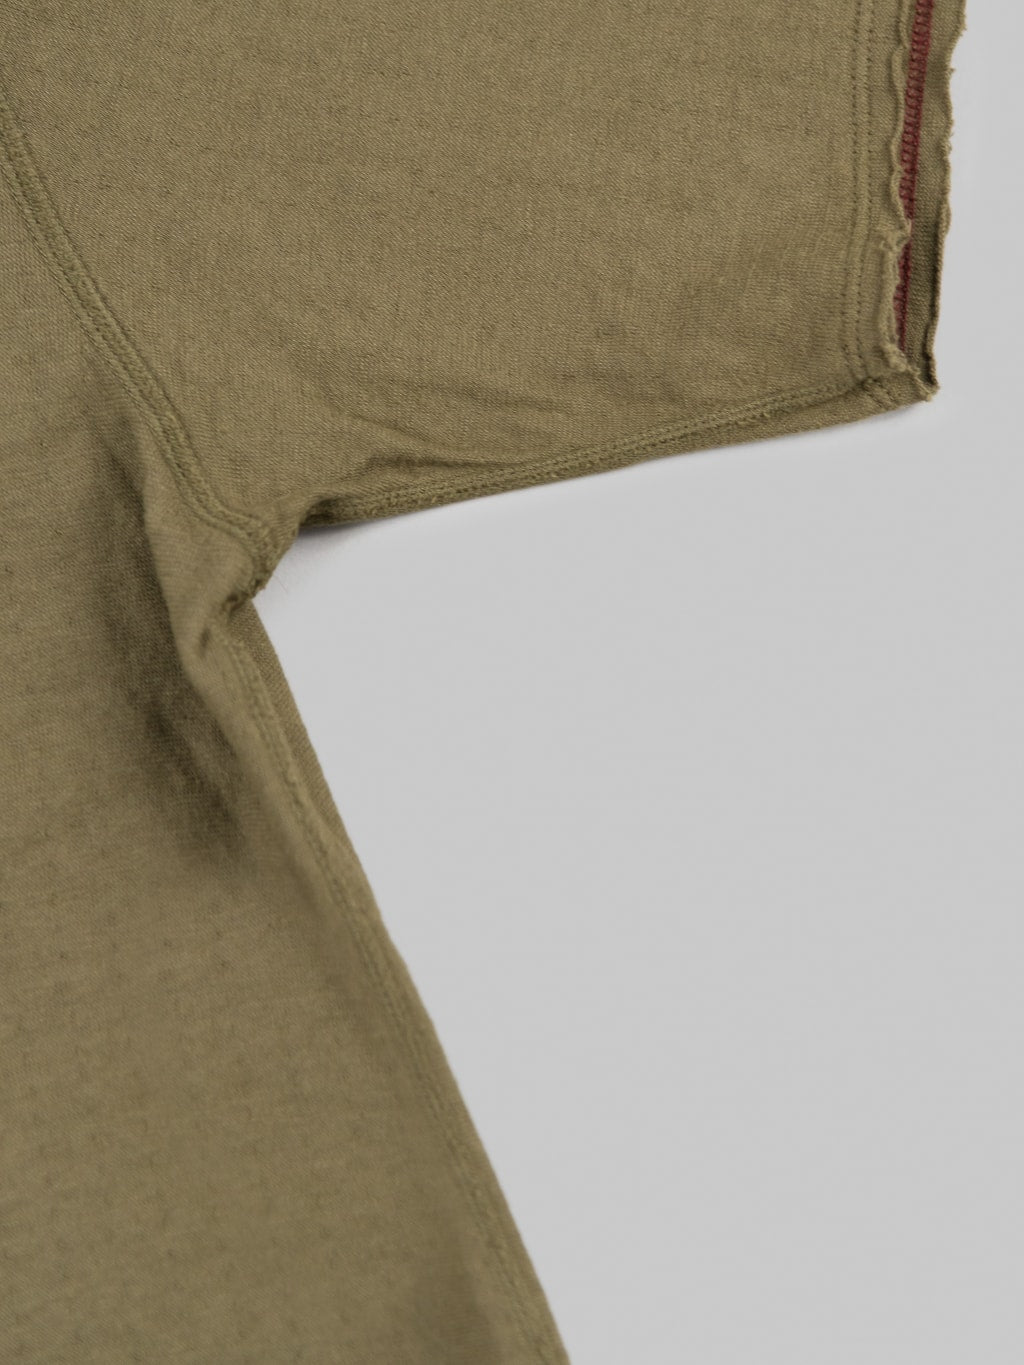 Loop and Weft Dual Layered Knit raw edge pocket TShirt olive sleeve